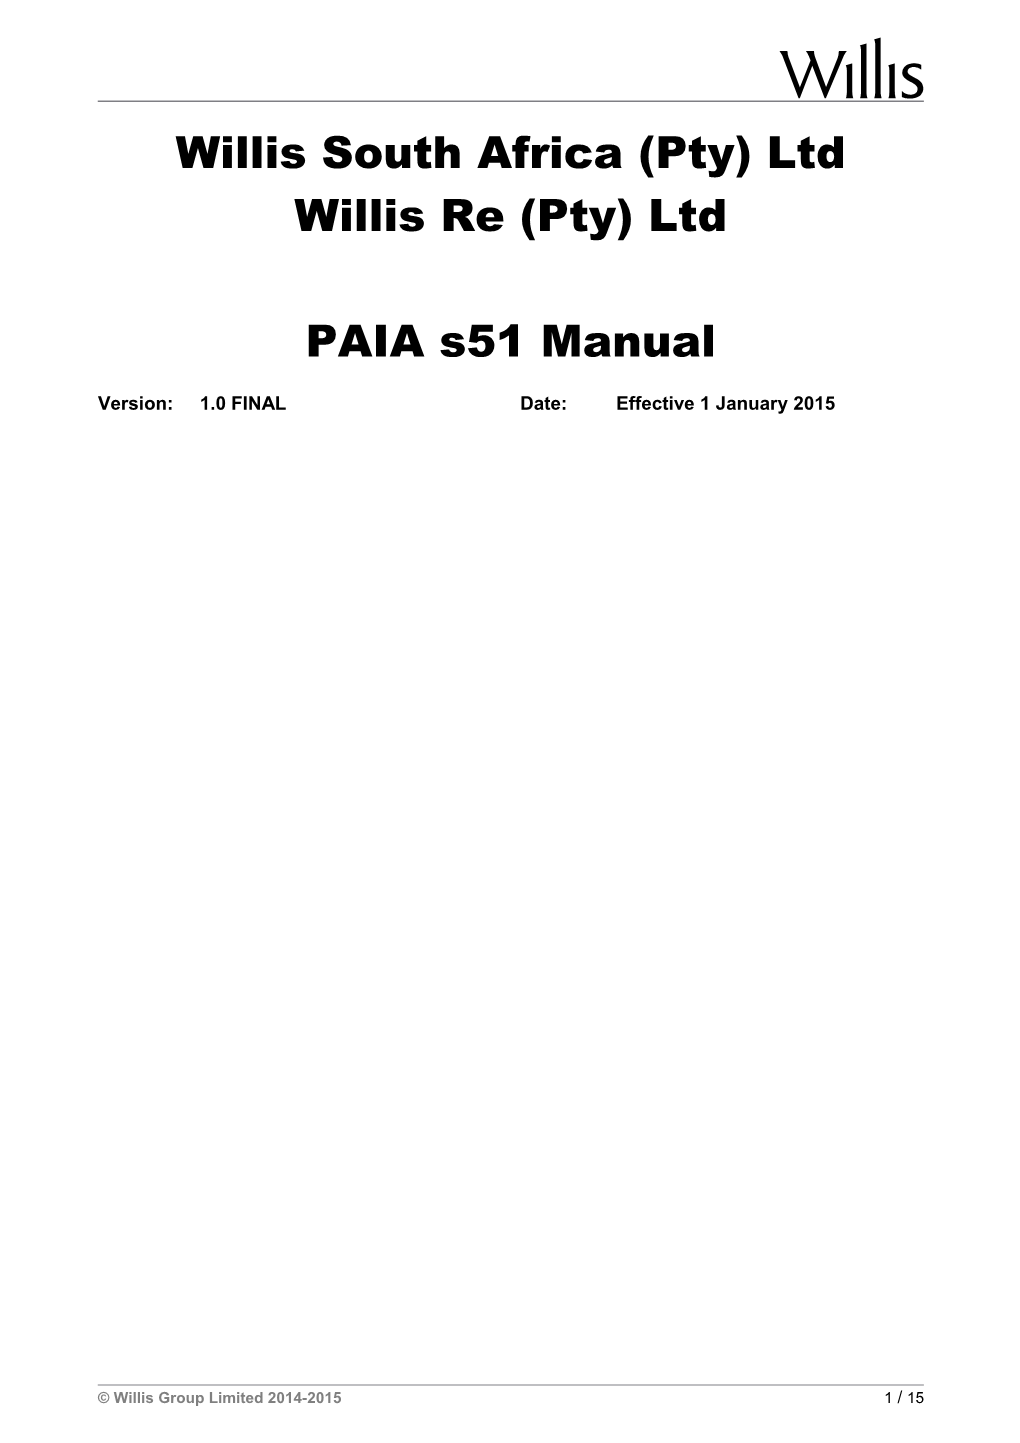 Willis ZA PAIA Manual V1.0 FINAL 1 January 2015